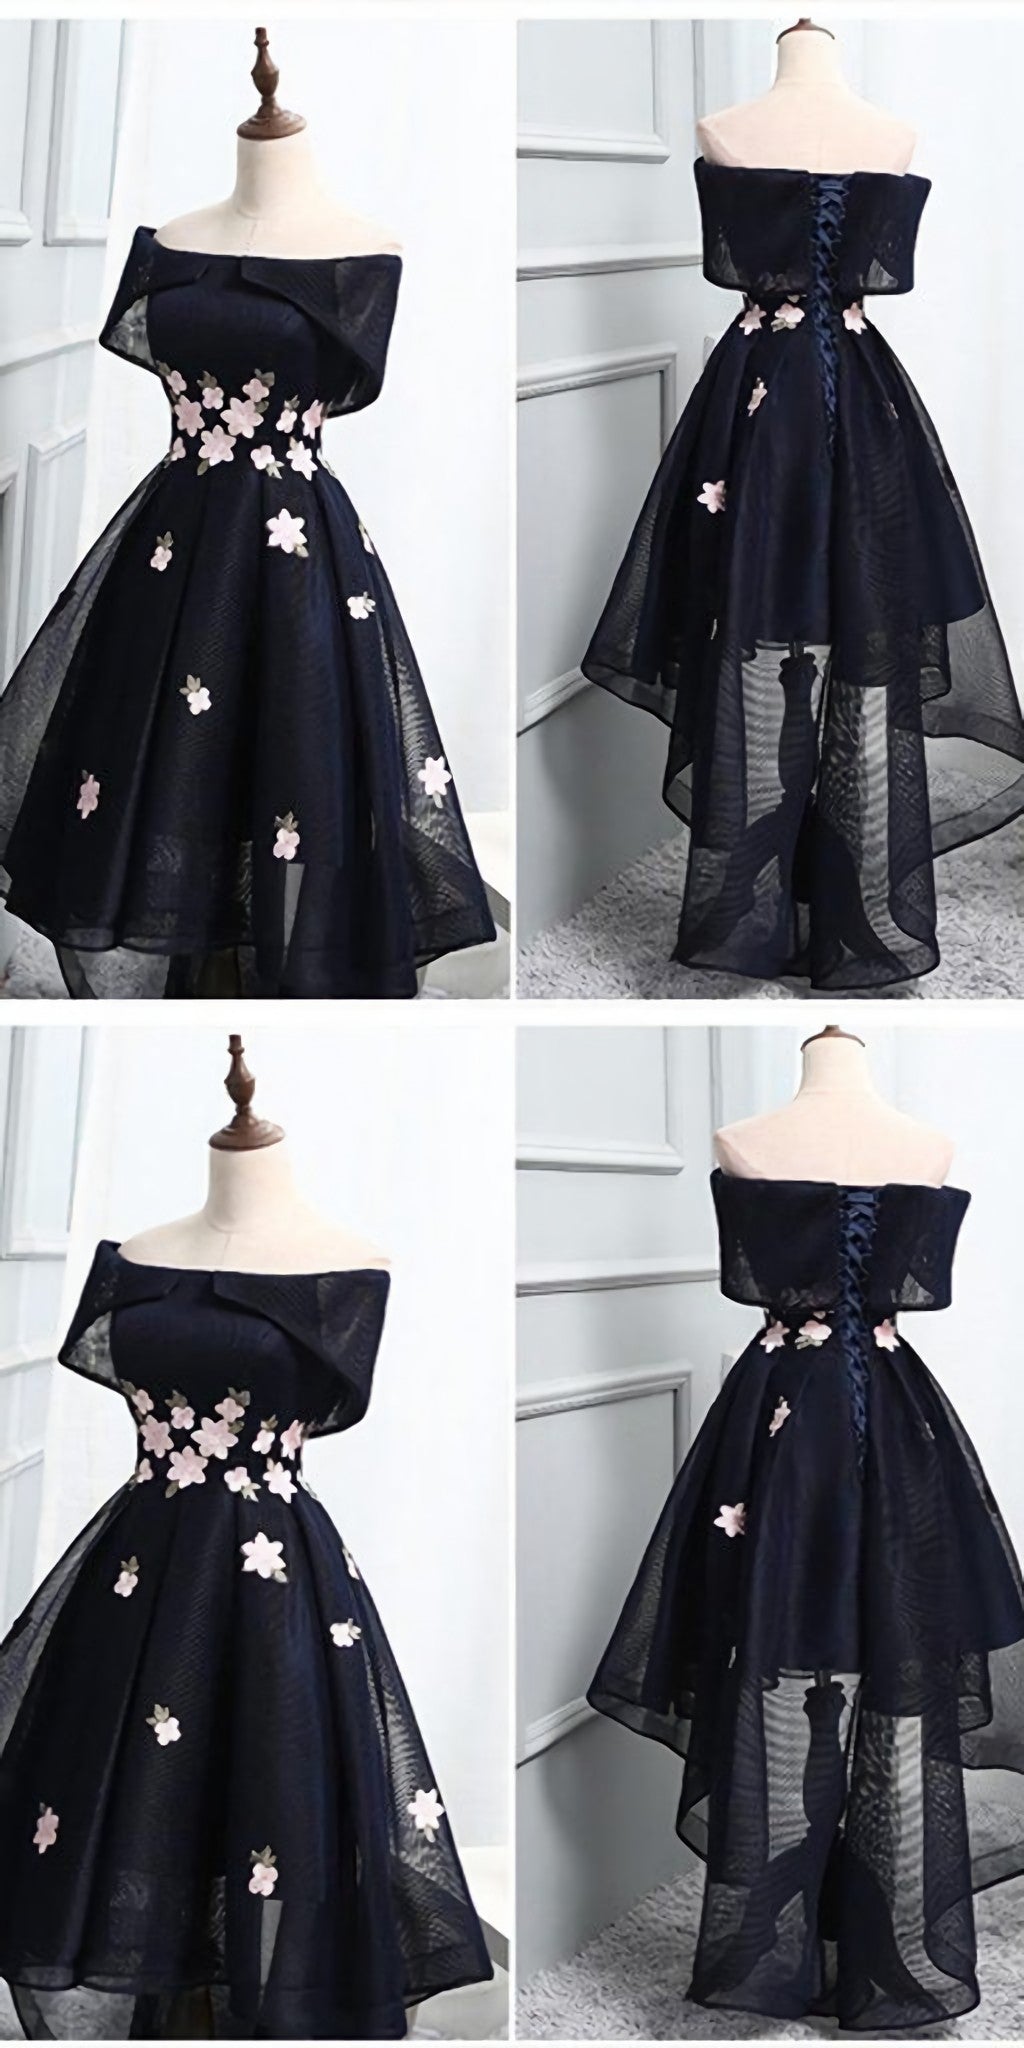 Prom Dresses V Neck, Off The Shoulder Black Organza Homecoming Dresses, With Handmade Flower Short Homecoming Dresses